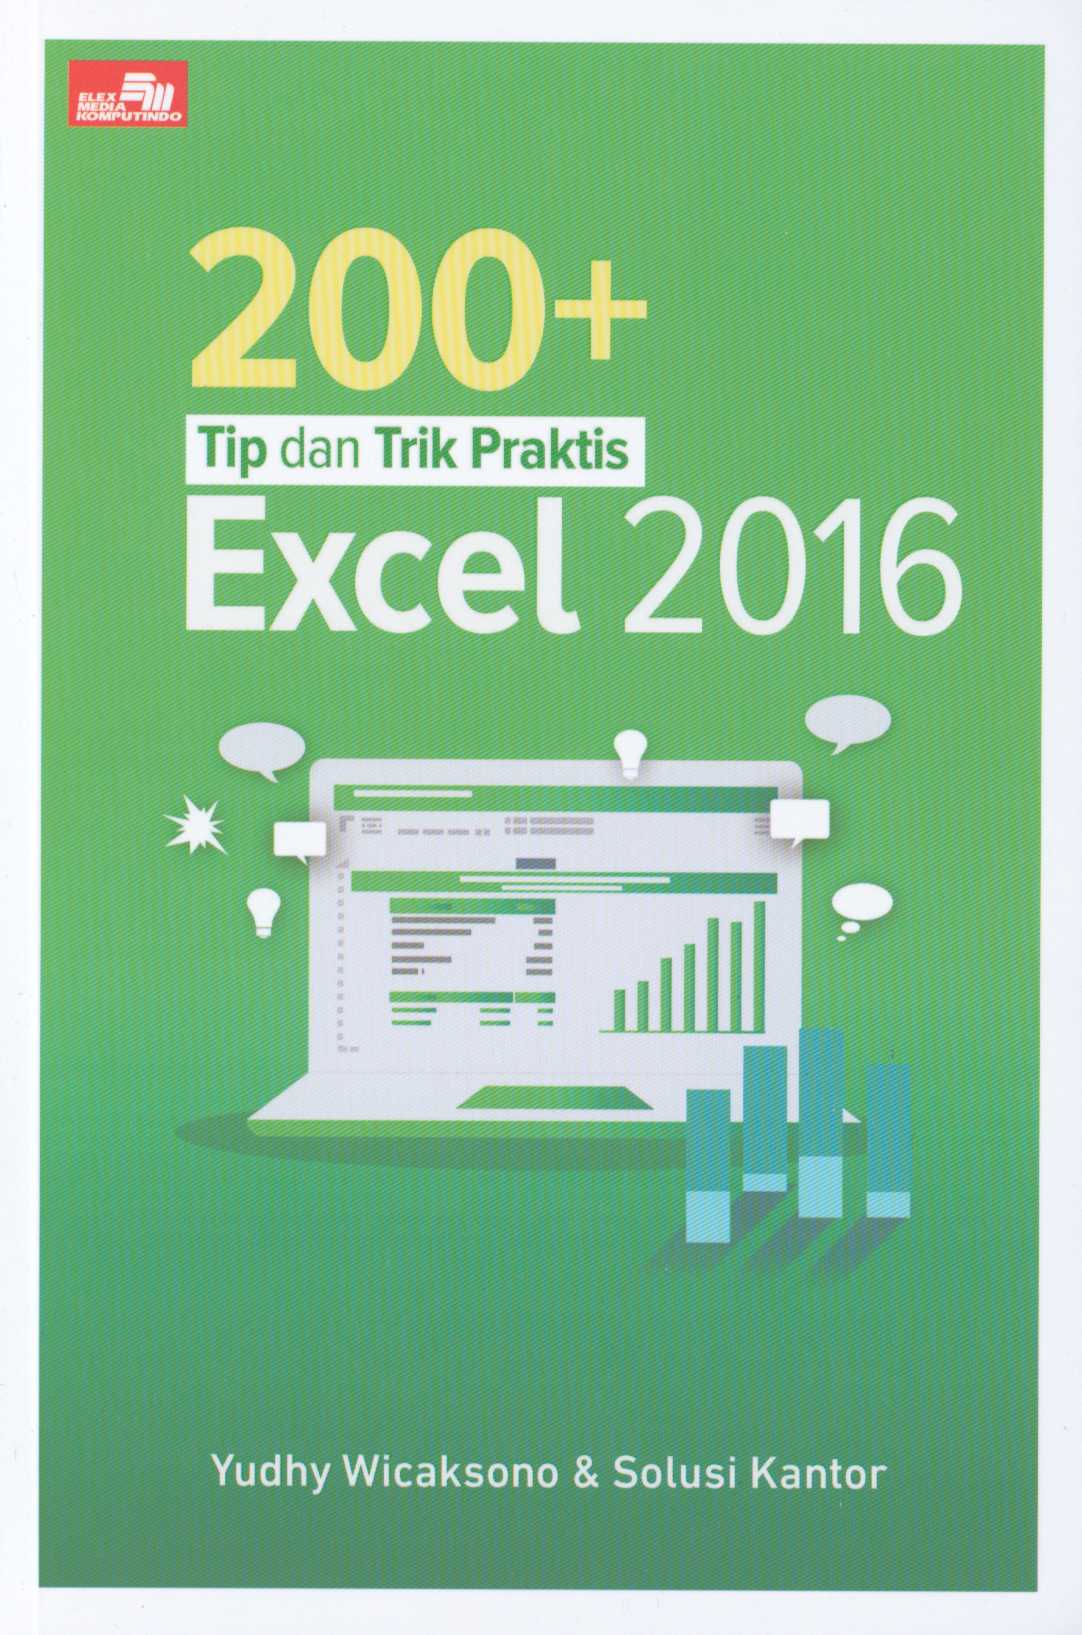 200+ tip dan trik praktis excel 2016